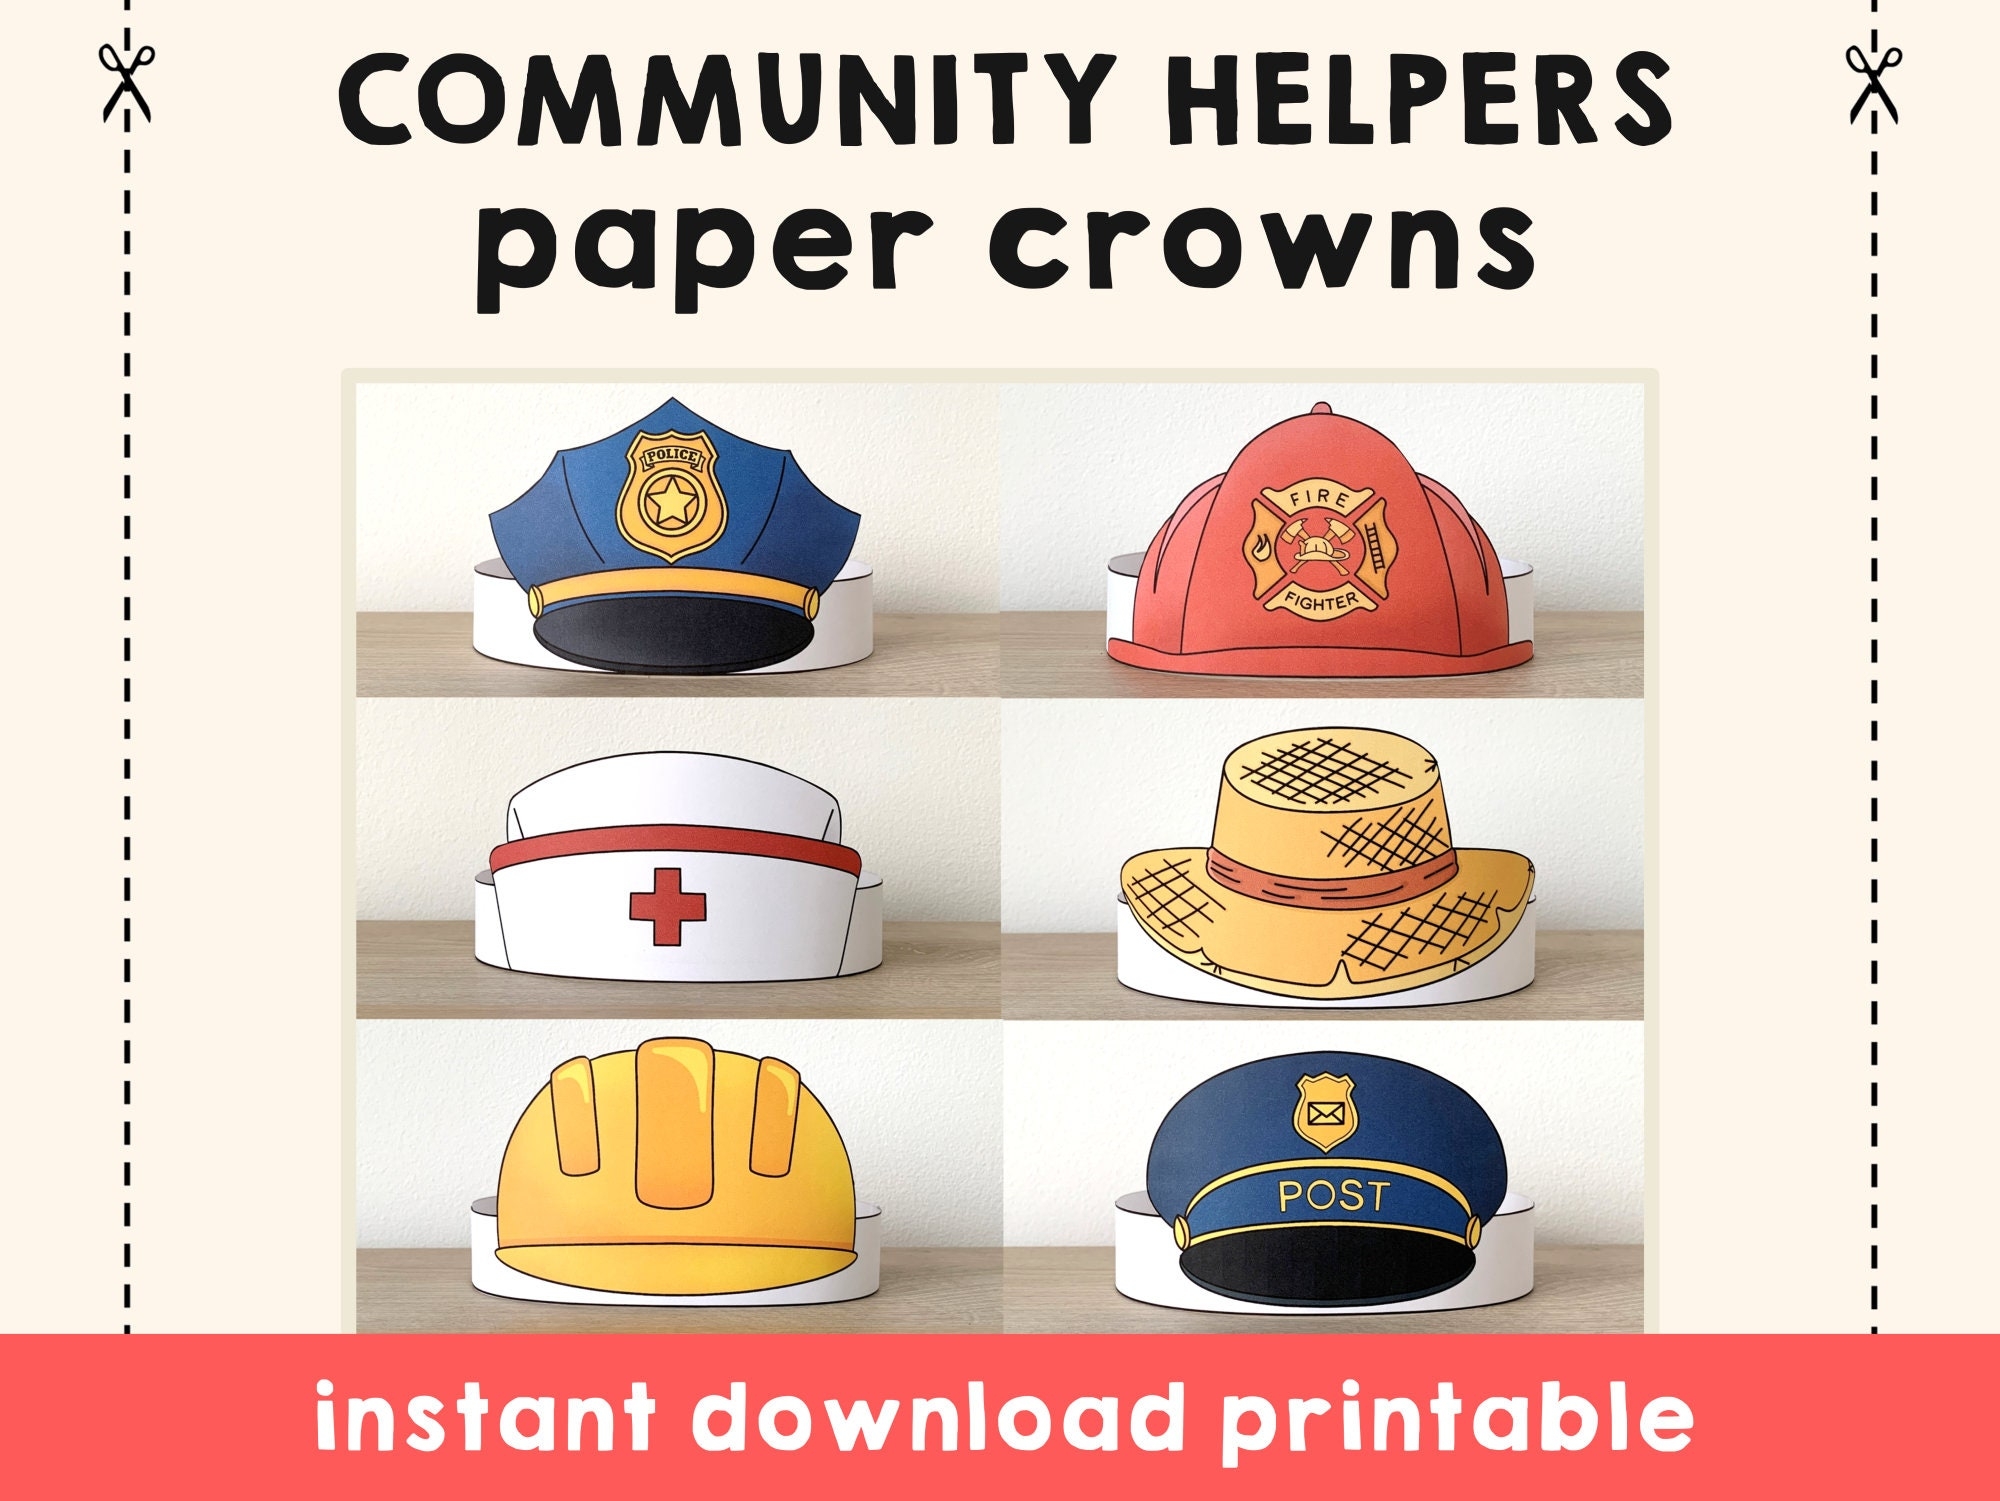 Free Printable Community Helpers Paper Hats